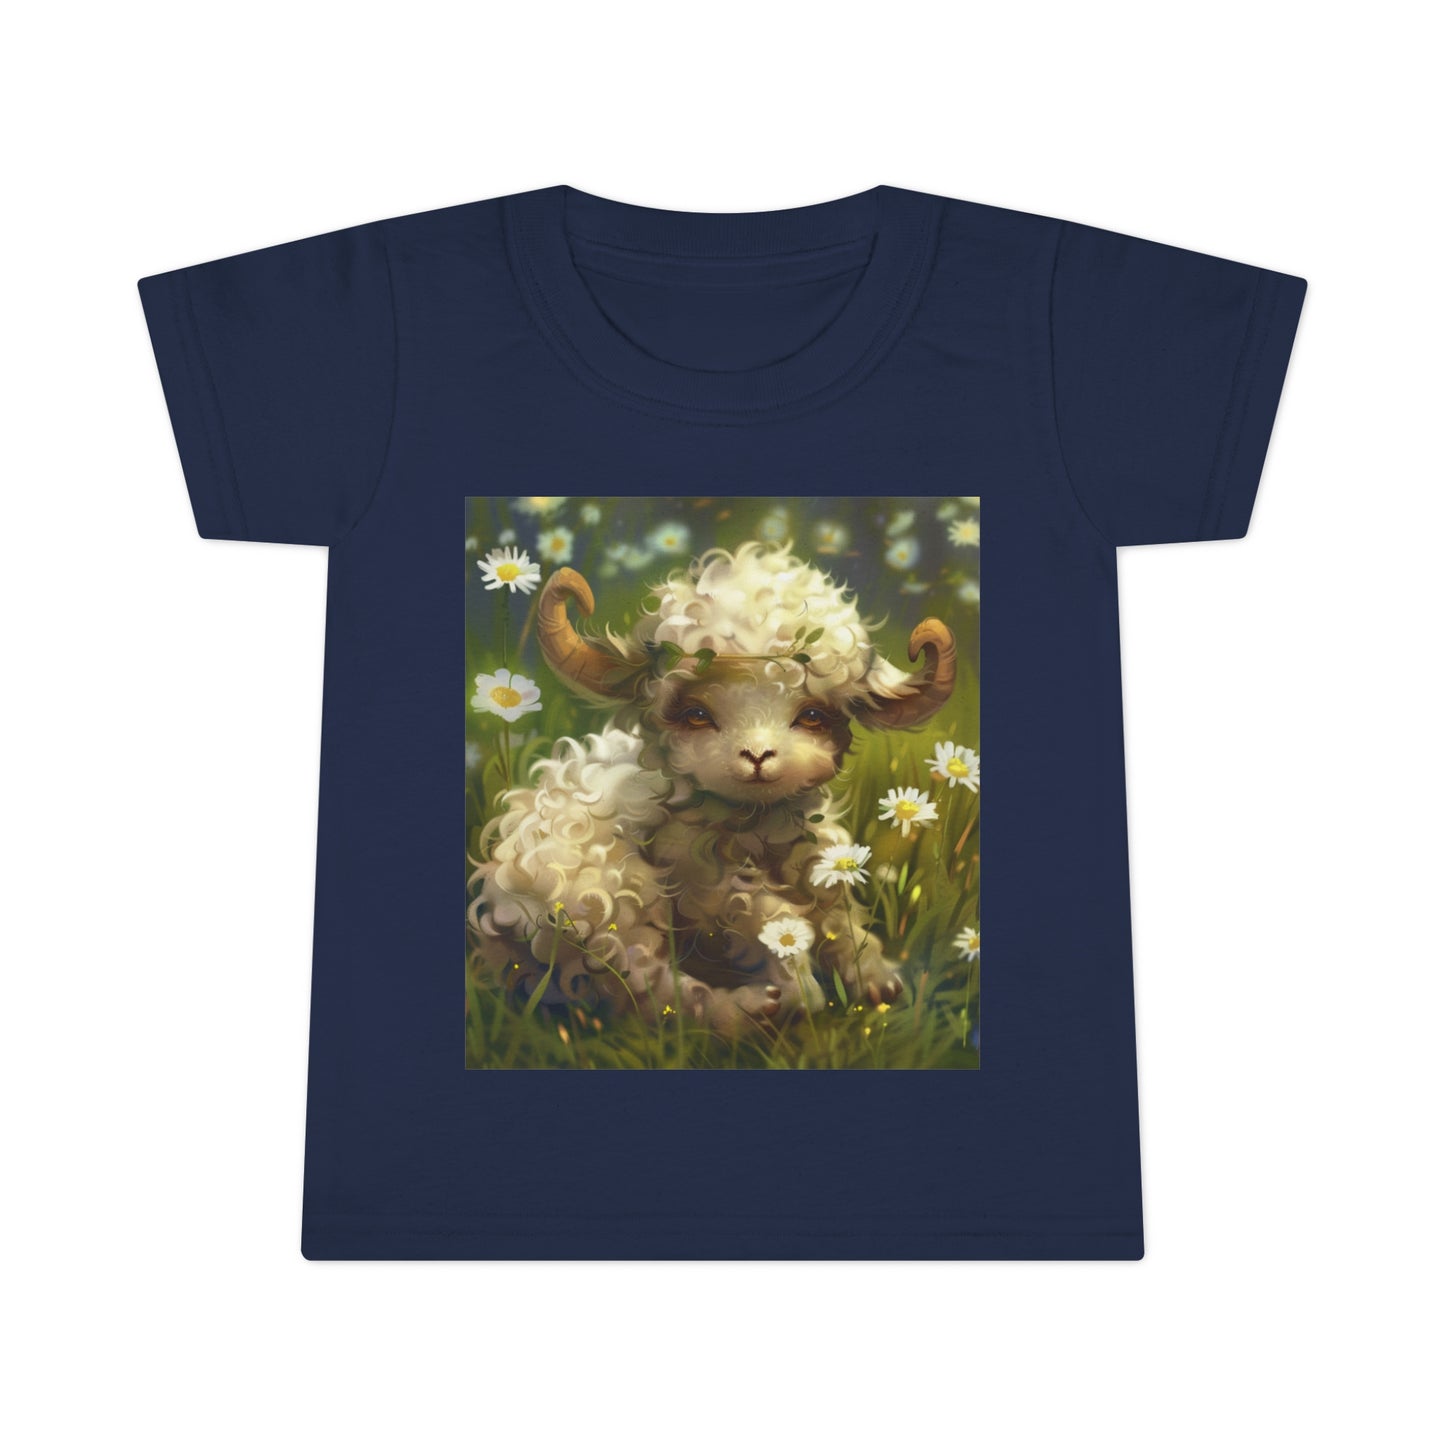 Aries zodiac Toddler T-shirt